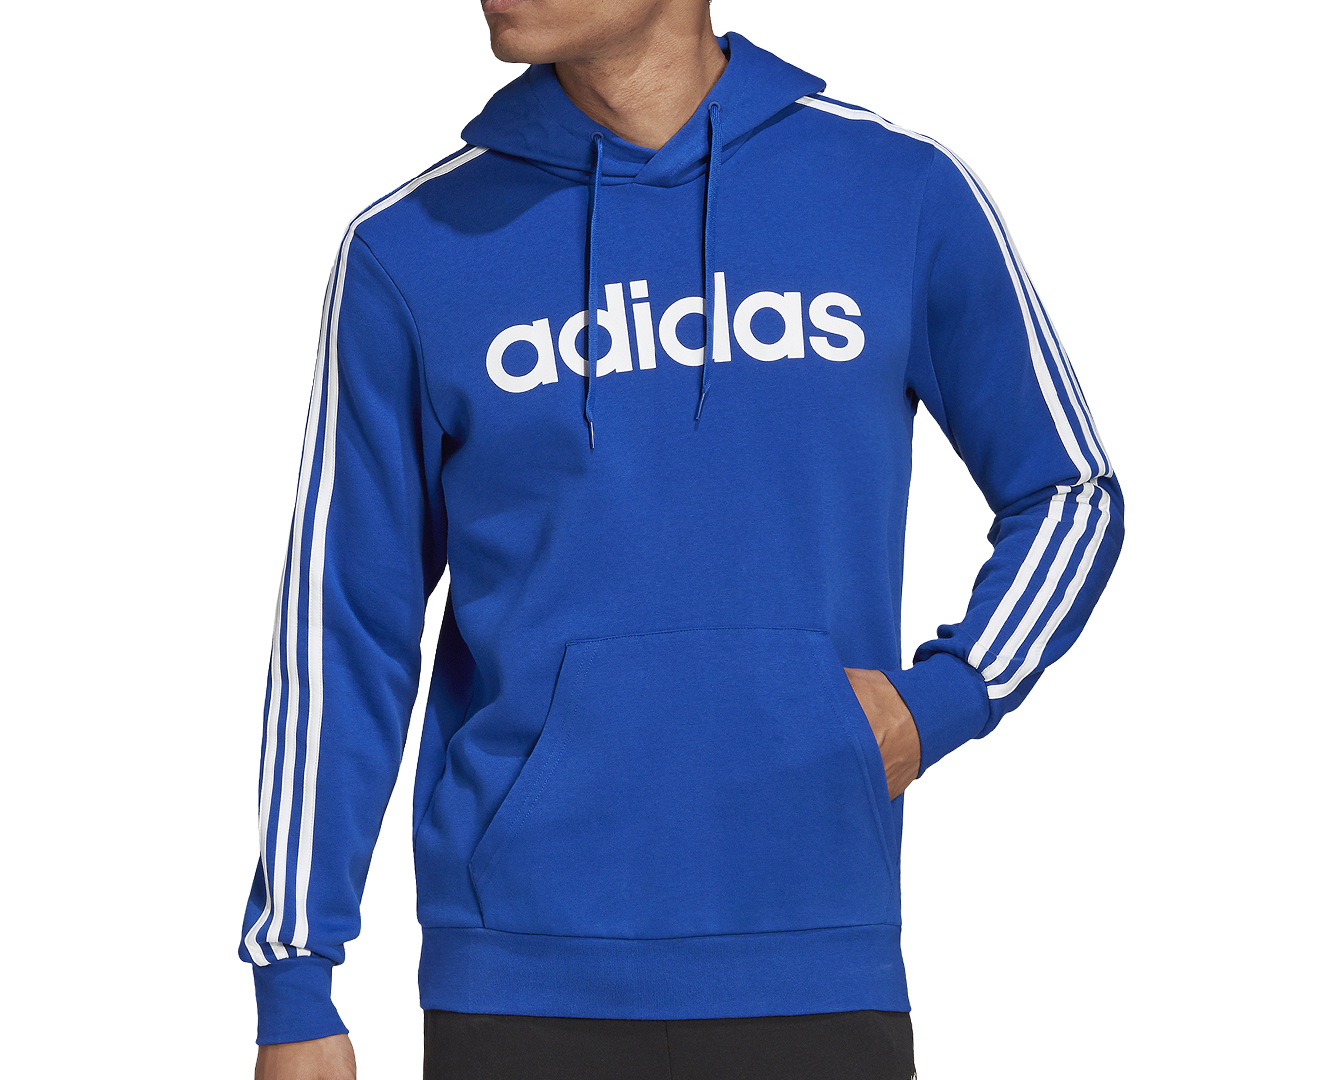 Adidas Men's Essentials 3-Stripes Pullover Hoodie - Royal Blue/White